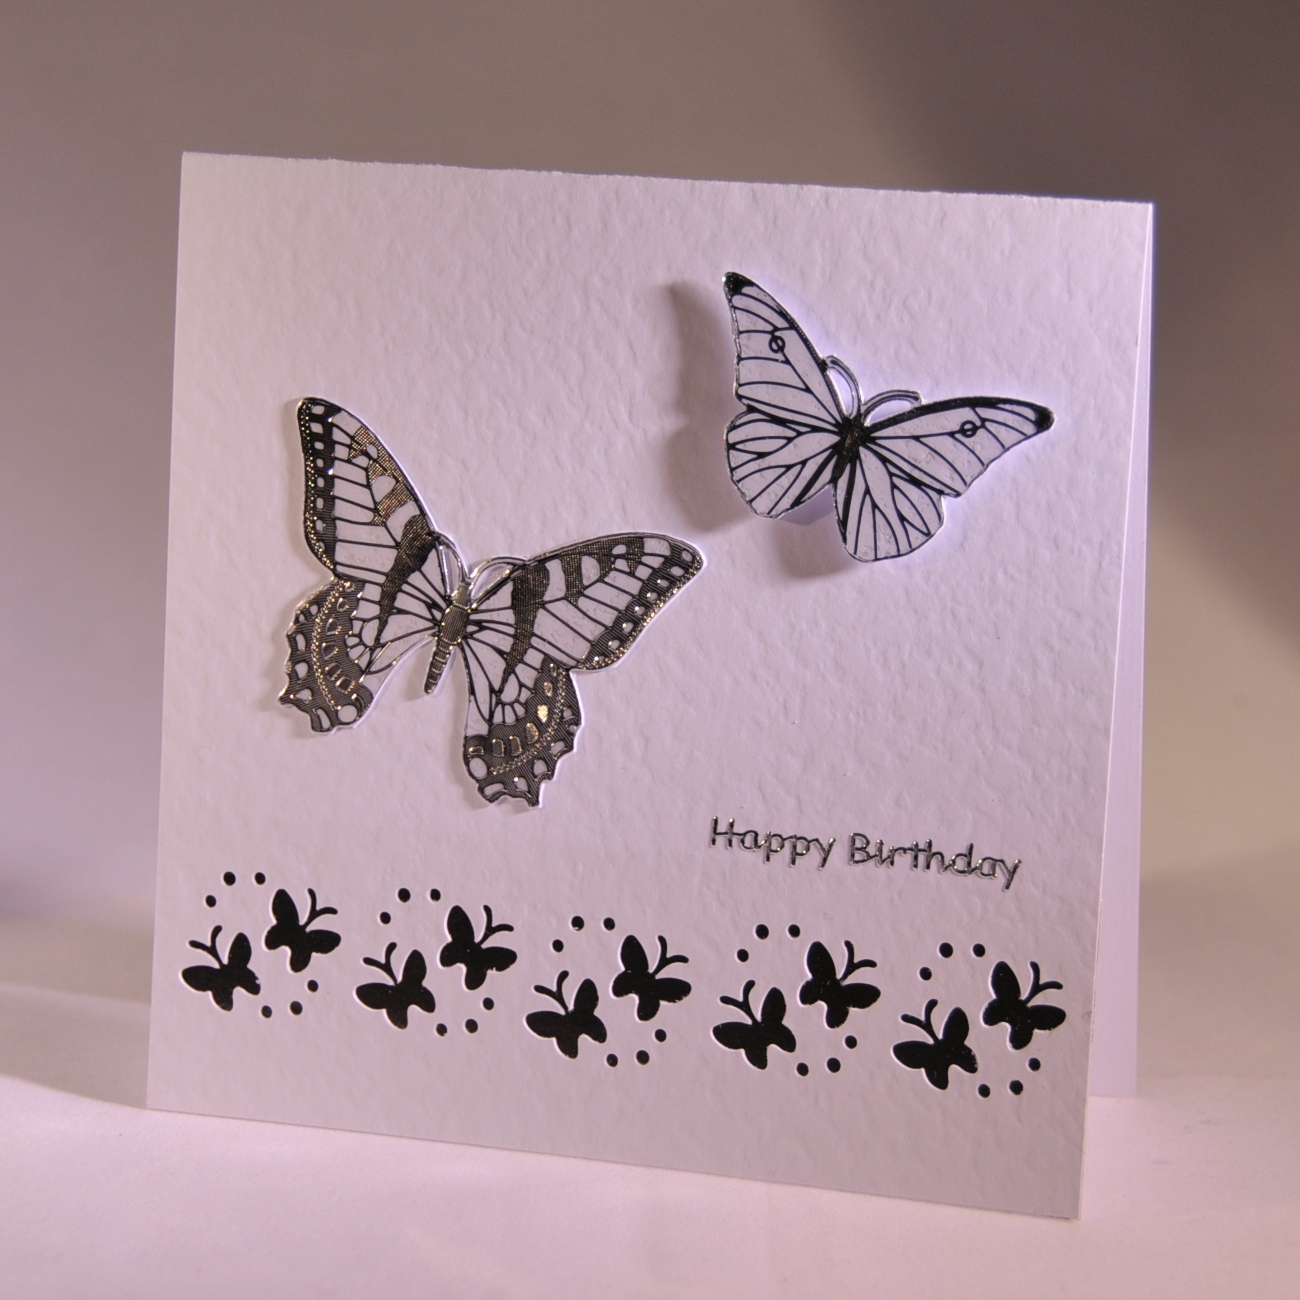 a-stylish-handmade-birthday-card-with-butterflies-handmade-by-helen